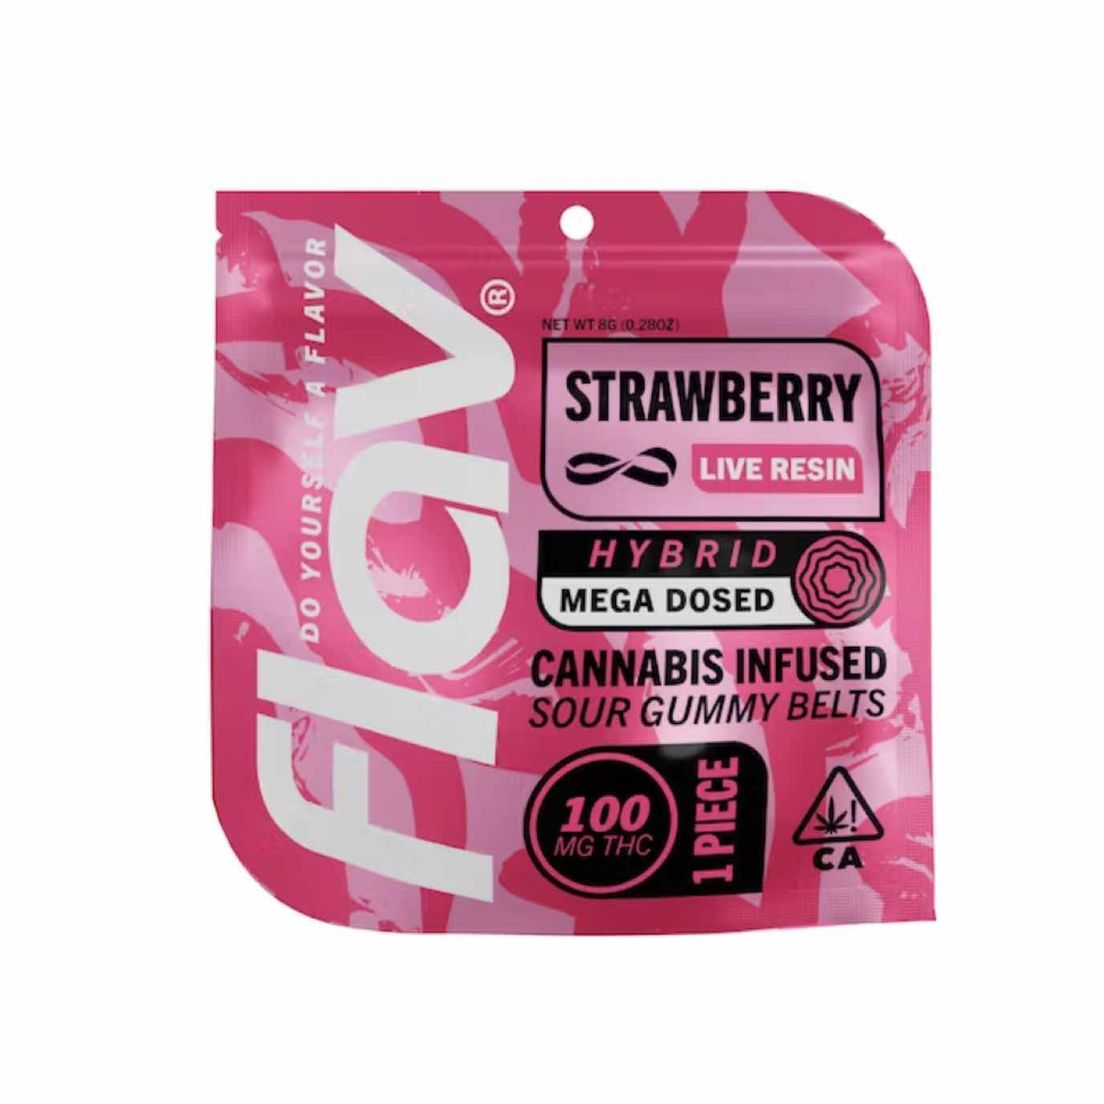 Flav - Macro Belt - Strawberry - Live Resin - 100mg